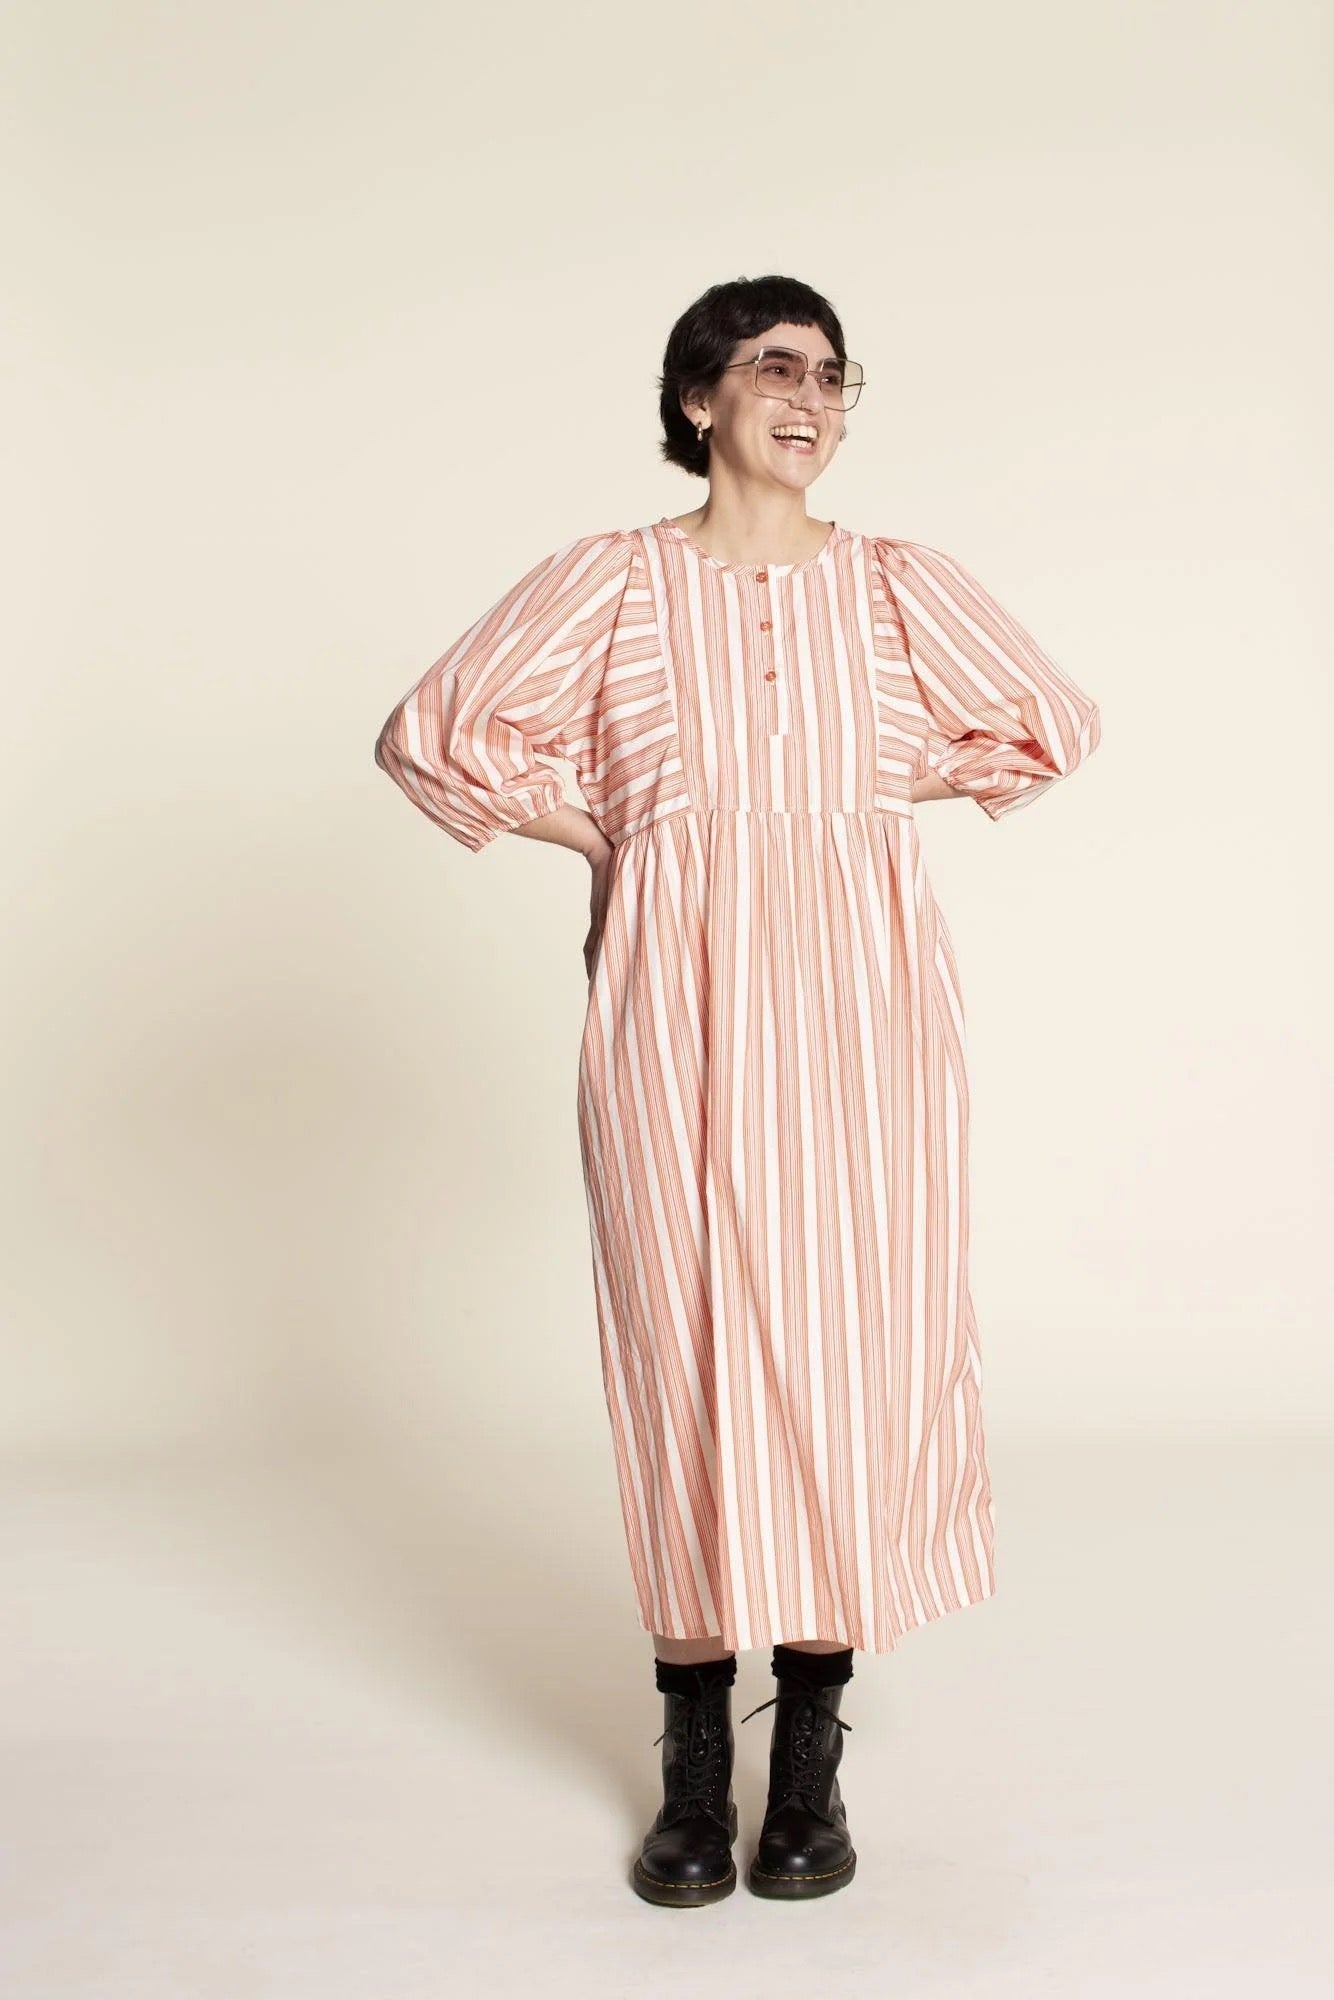 Wardrobe by Me -Balka Dress Sewing Pattern